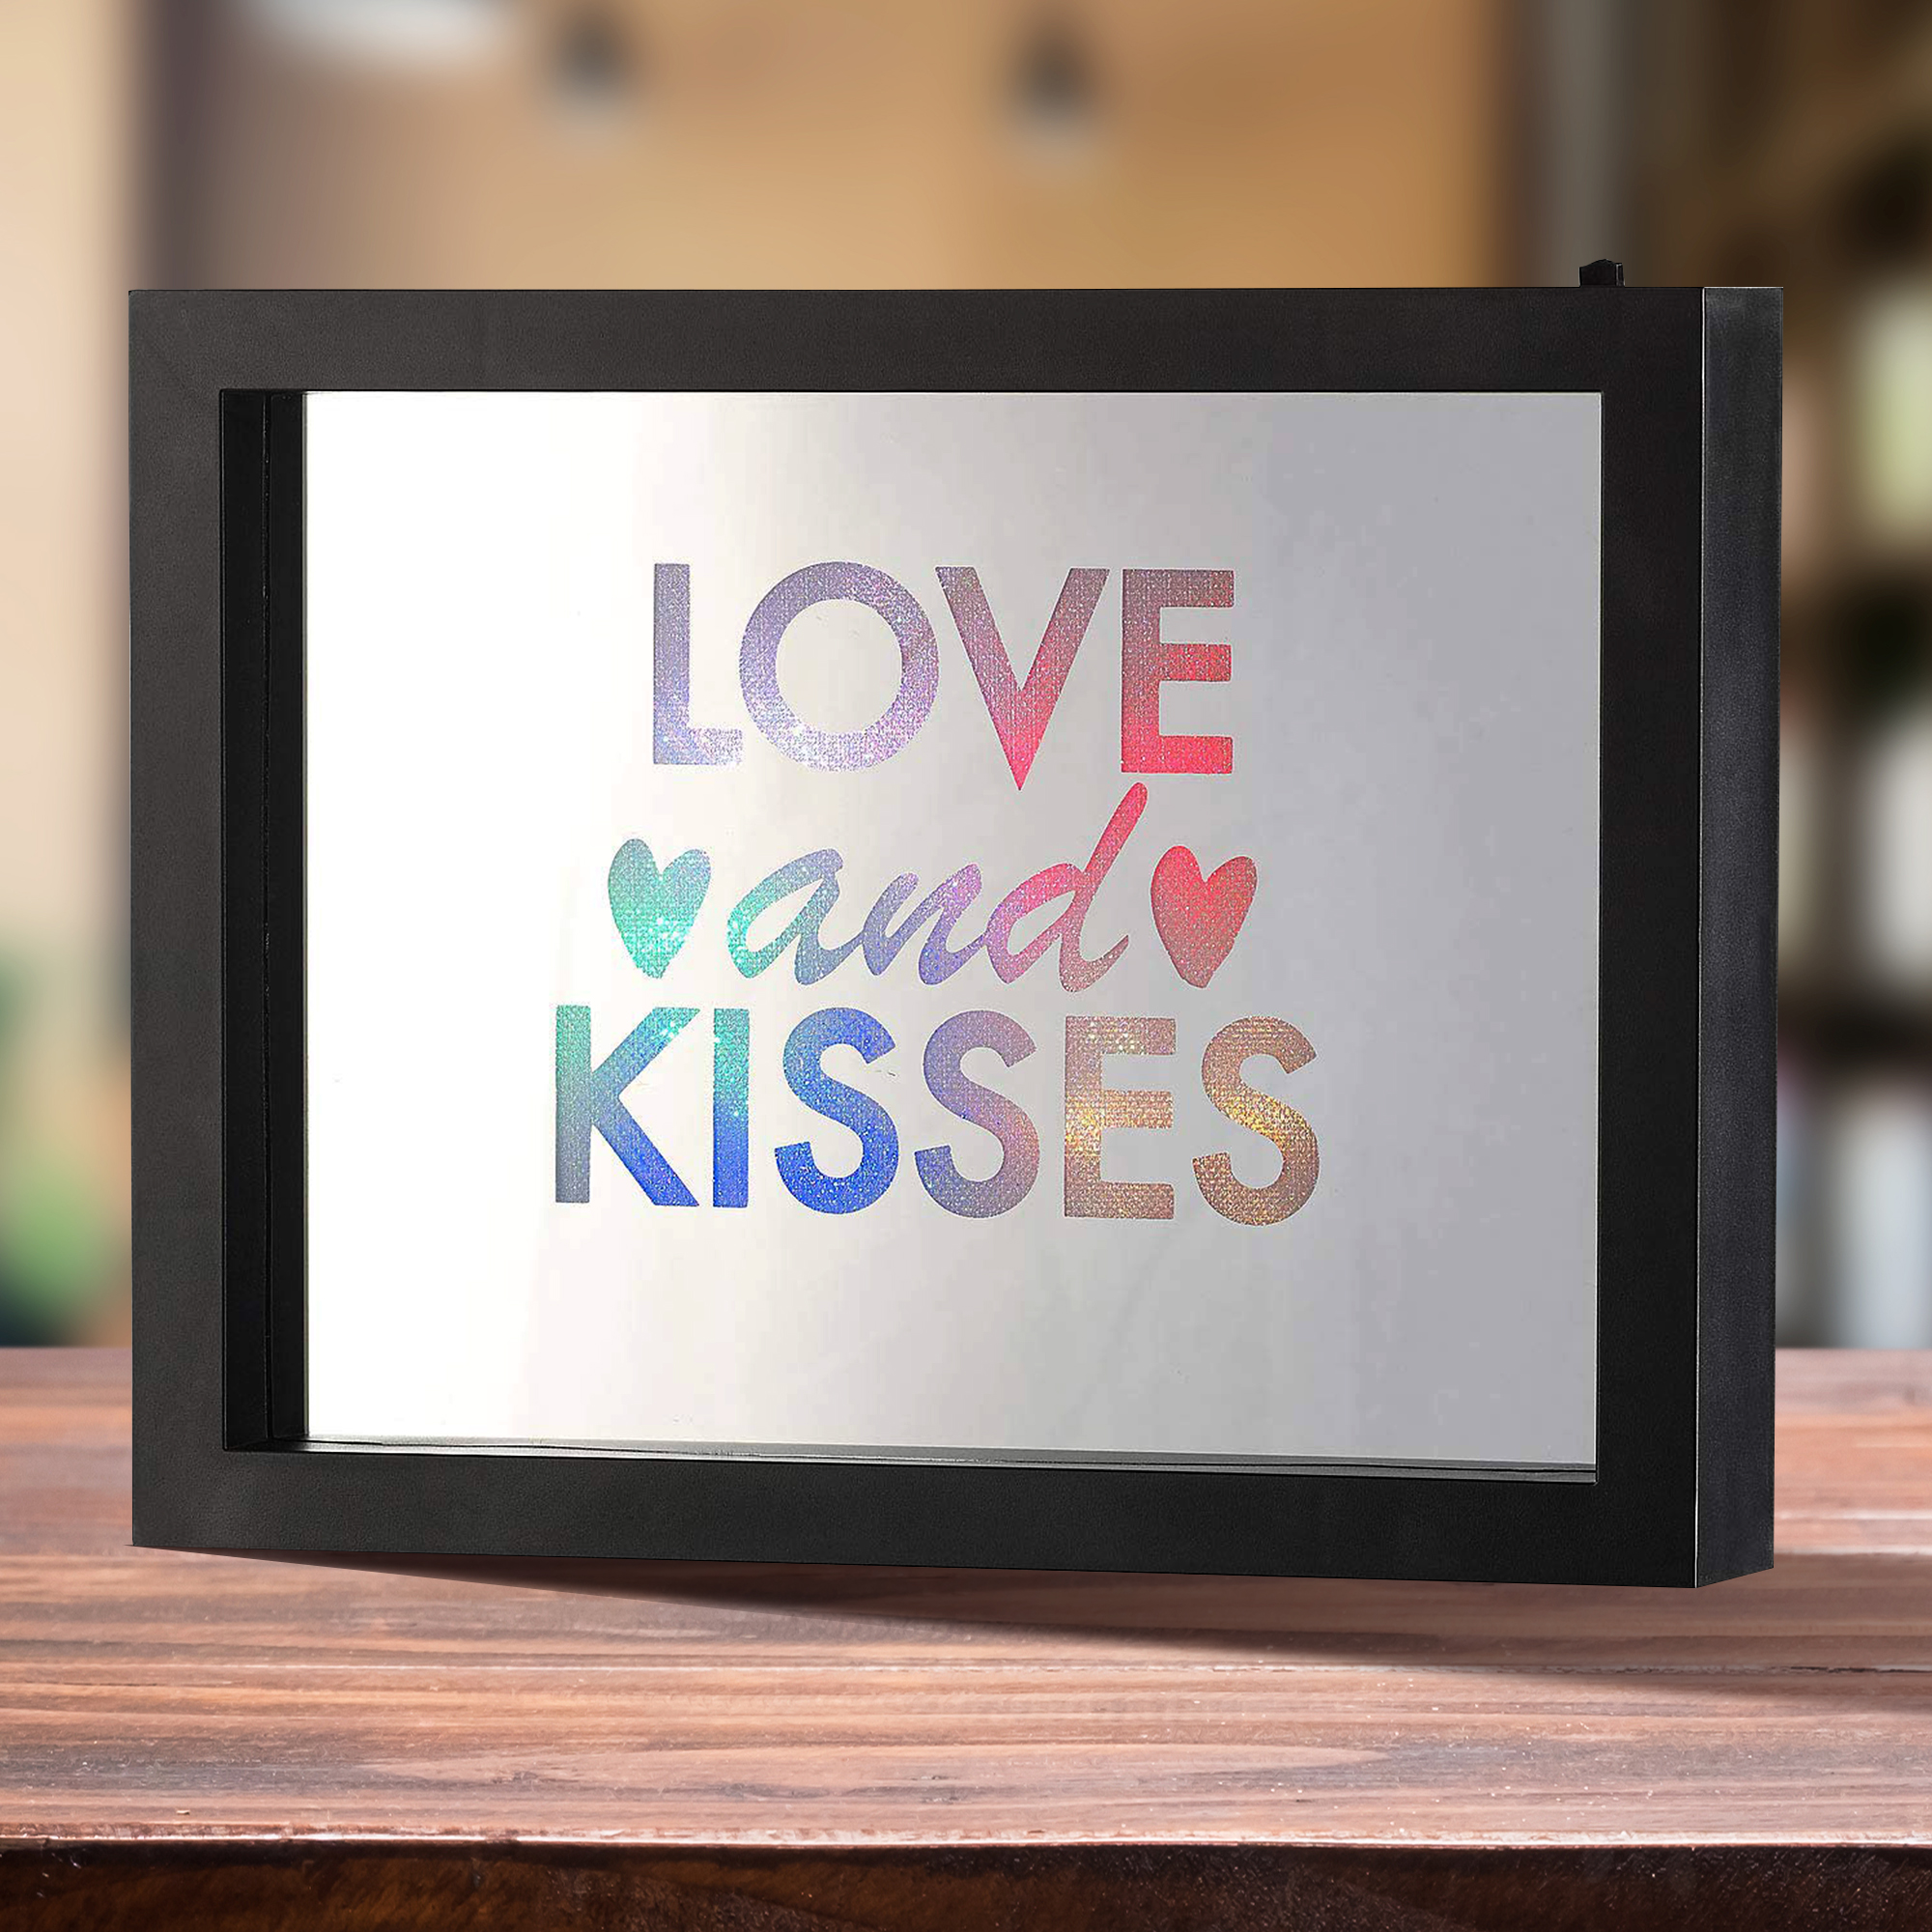 LED Rahmen mit Farbwechsel - Love And Kisses 4065